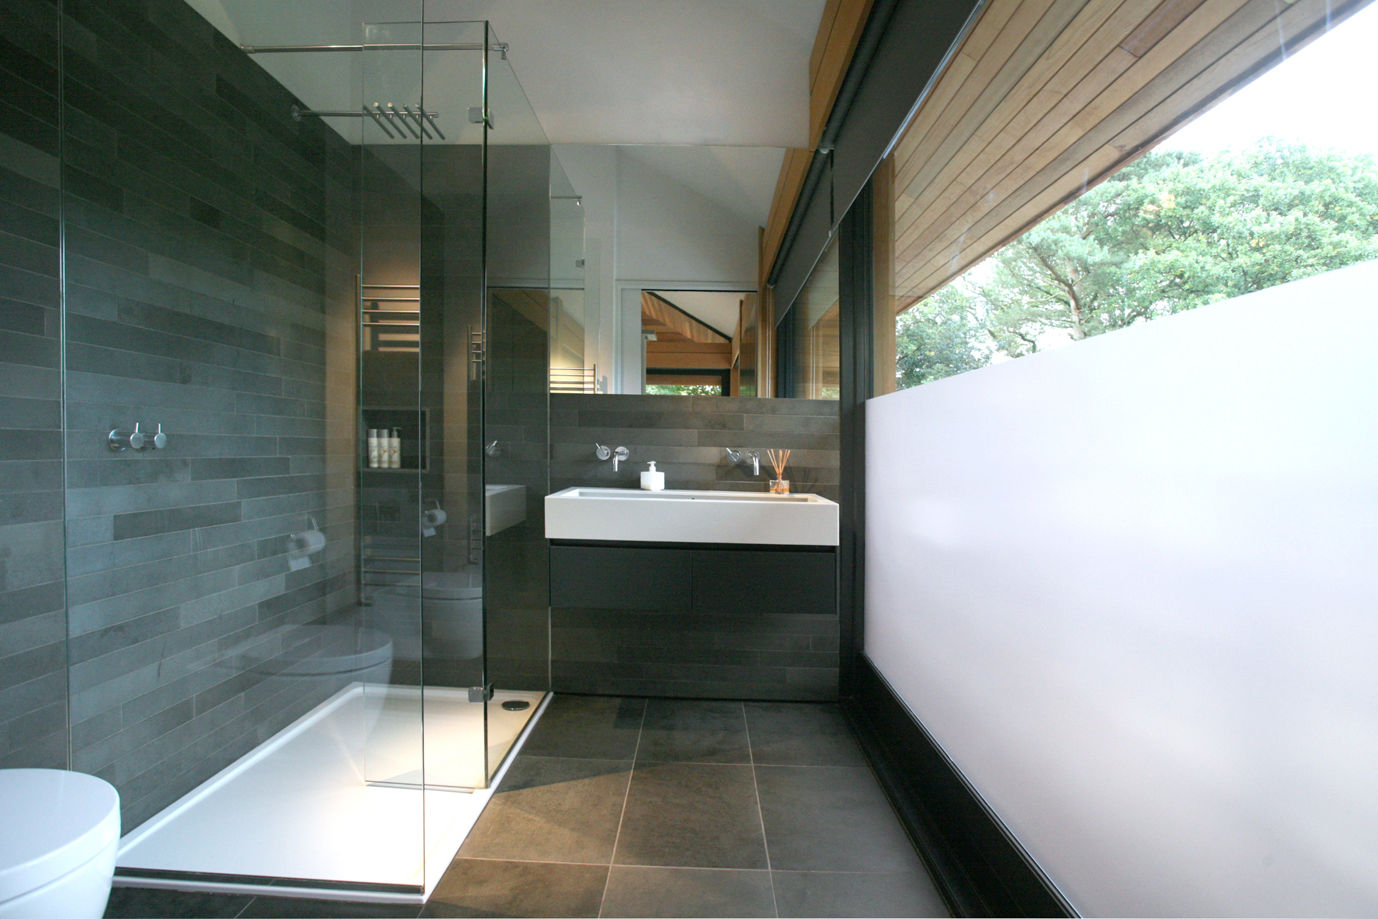 Cedarwood, Tye Architects Tye Architects Salle de bain moderne